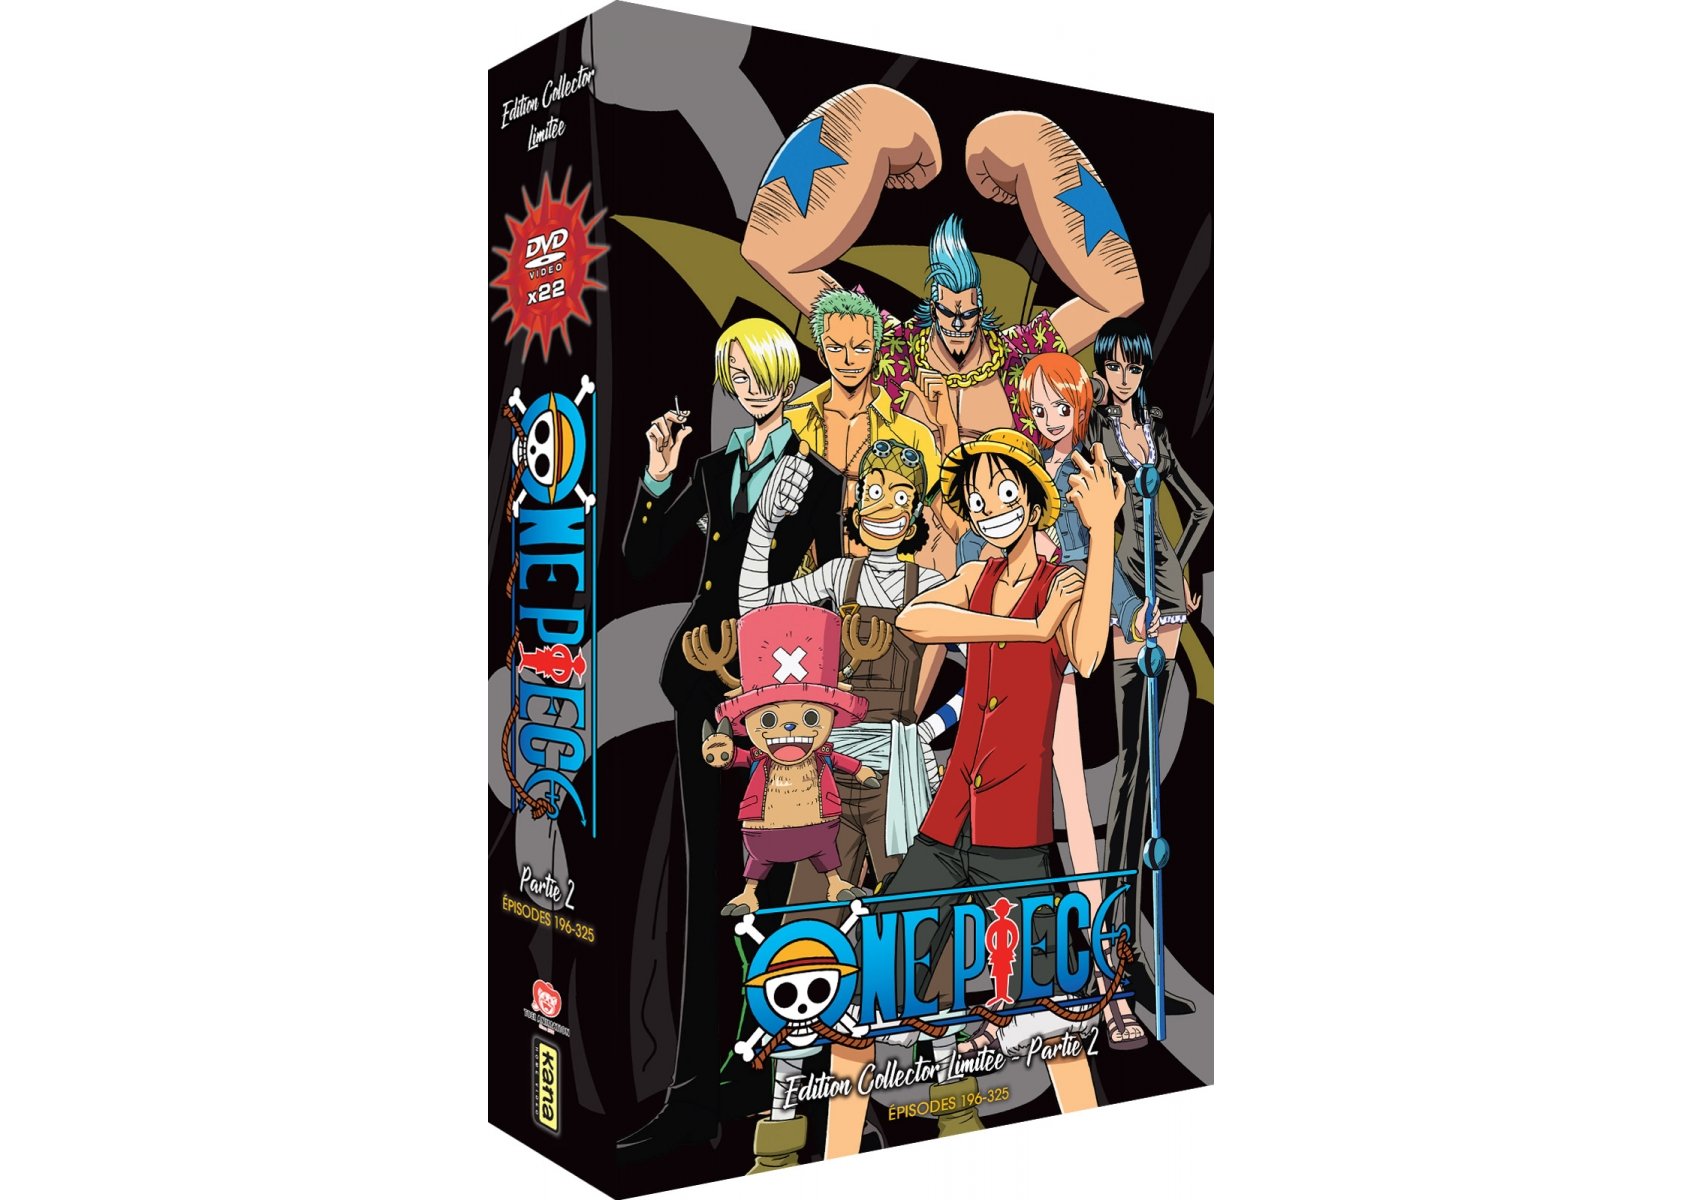 One Piece - EDITION EQUIPAGE - PARTIE 4: Coffret DVD / BluRay Manga chez  Kana Home Vidéo